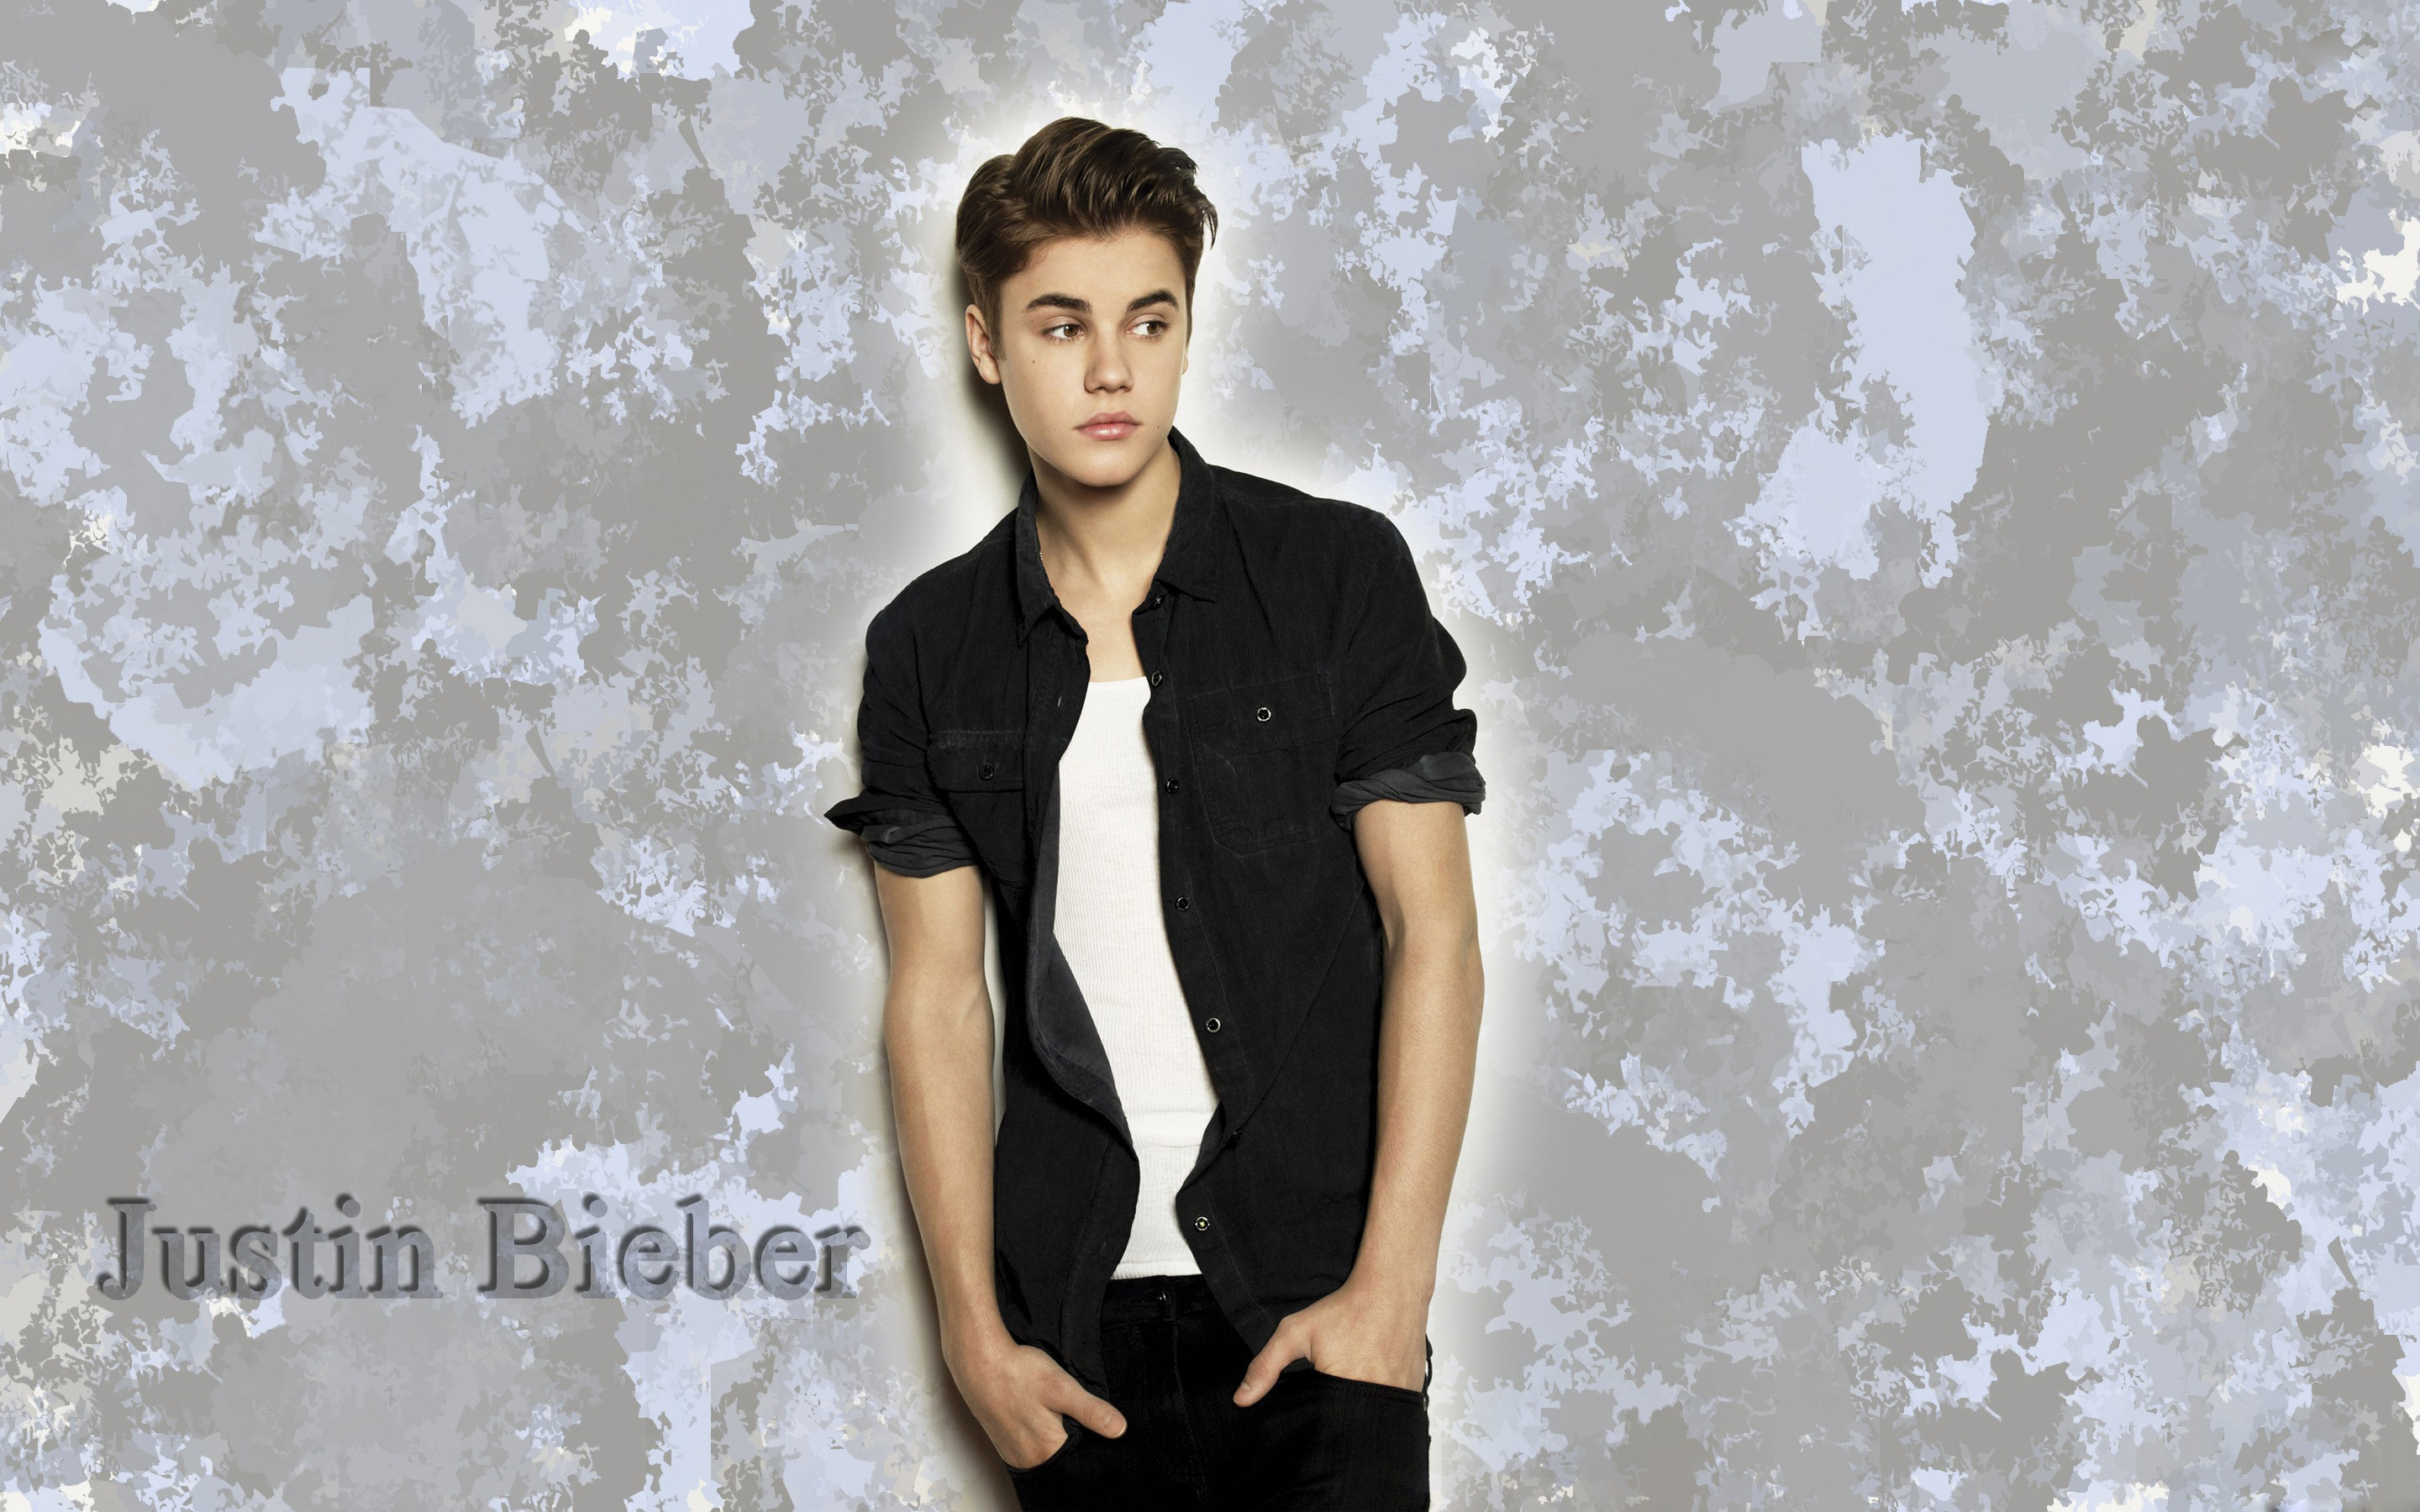 Justin Bieber Wallpaper High Quality Pixelstalknet